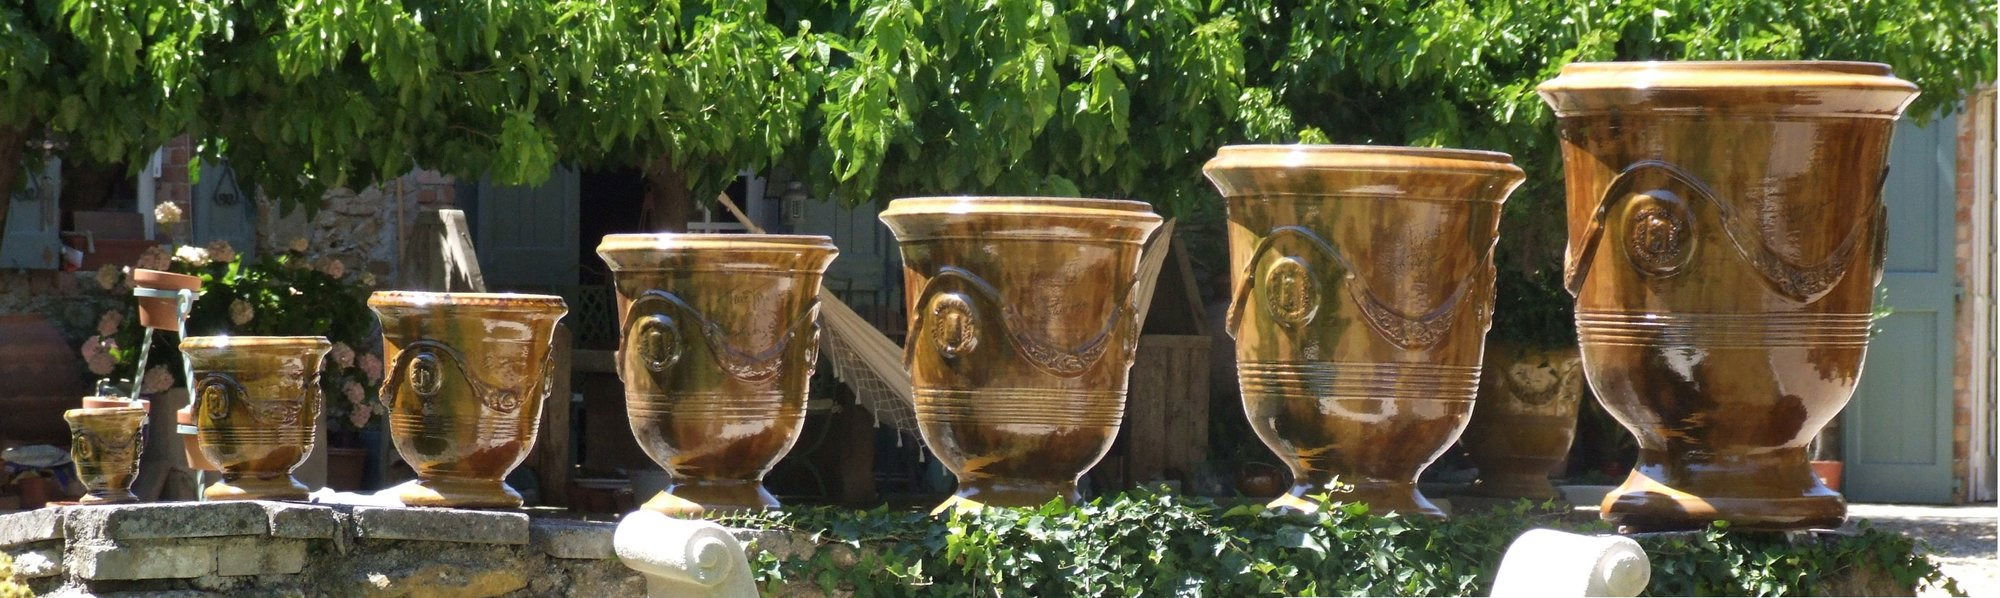 Les poteries d'Anduze